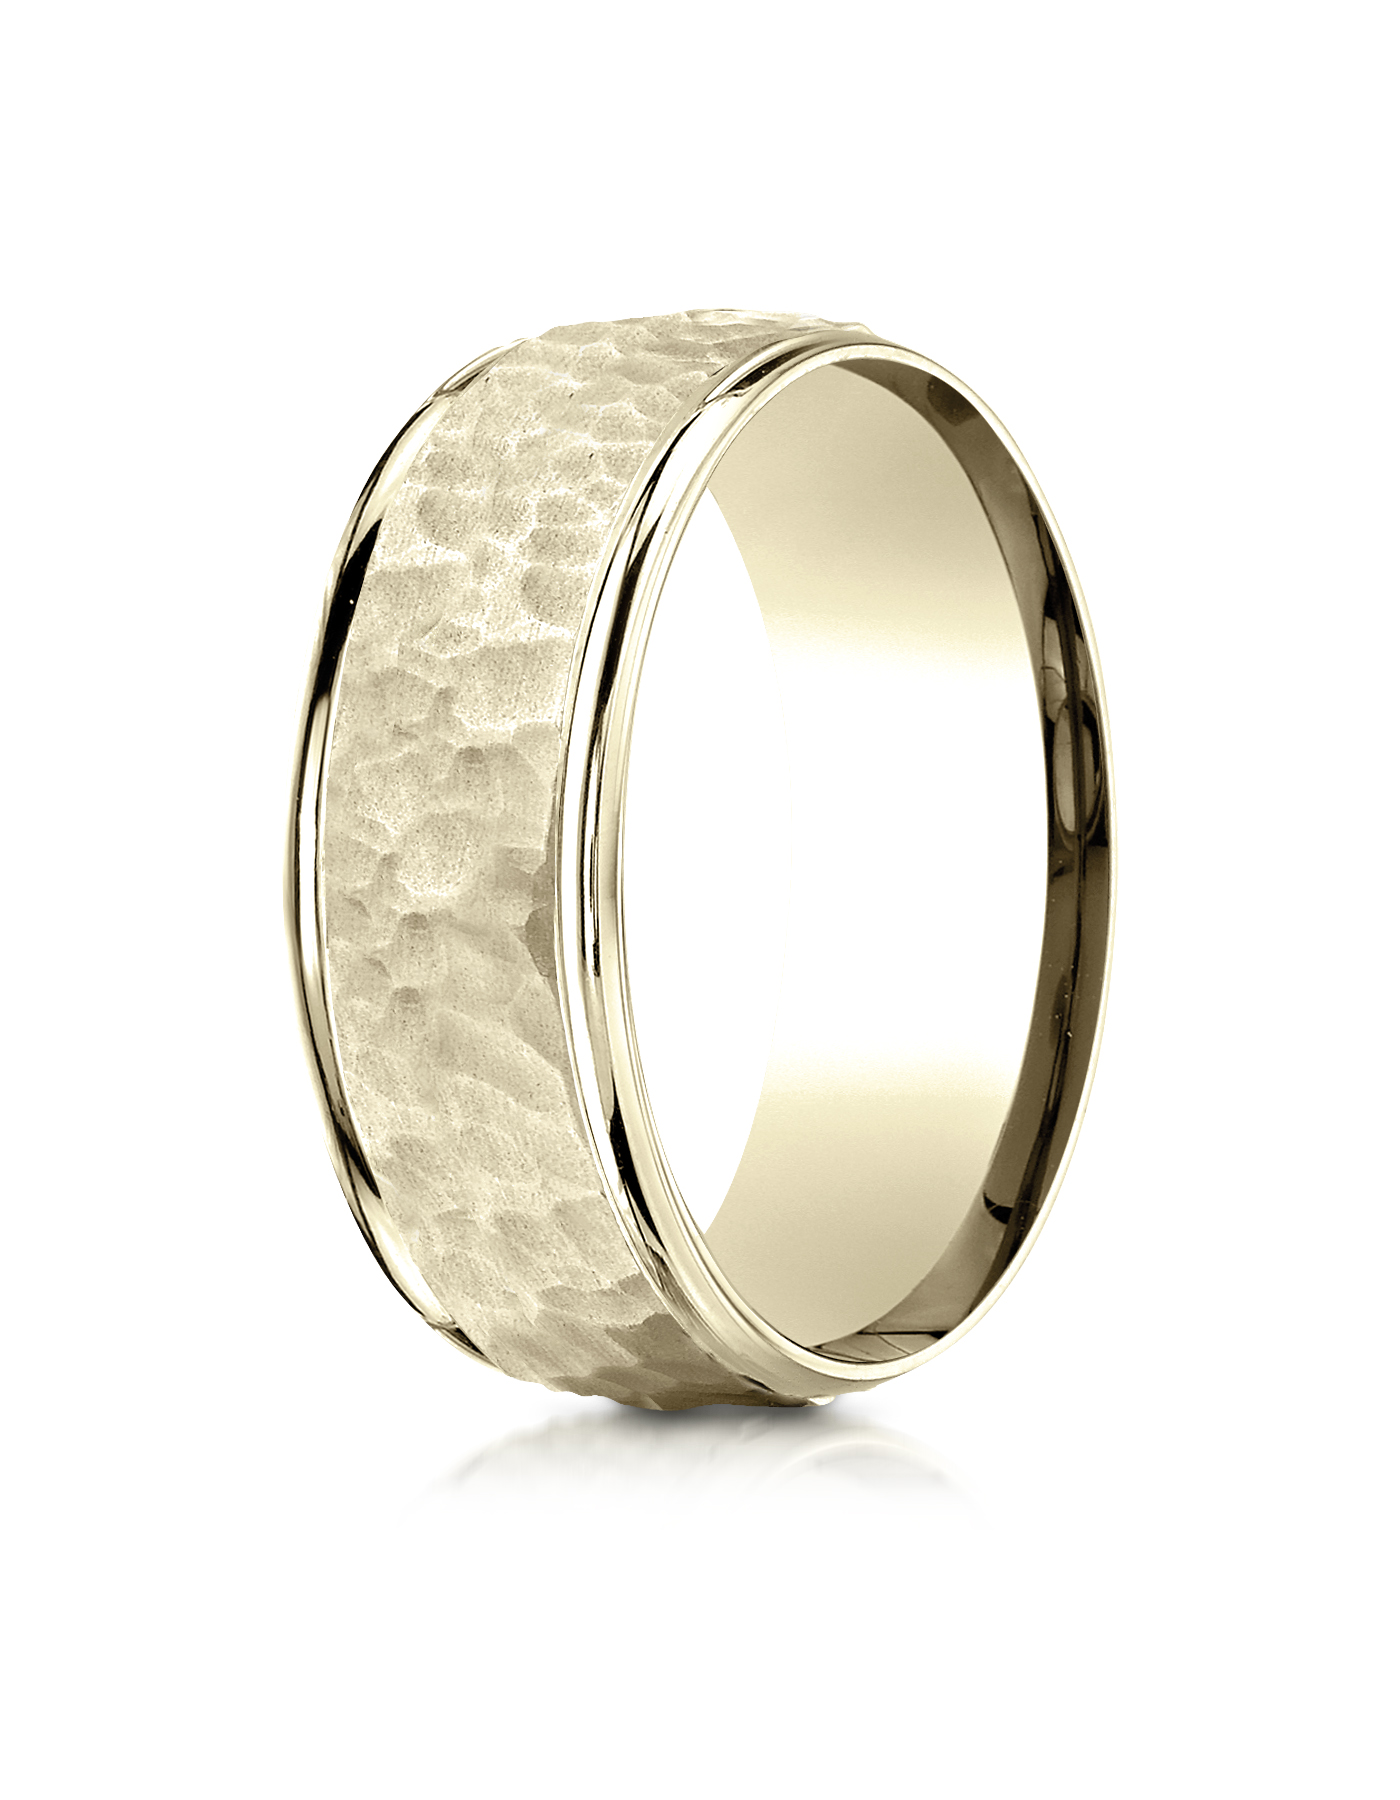 10k White Gold 8mm Comfort-Fit Satin Finish Polished Round Edge Carved Design Wedding Band Ring Men 